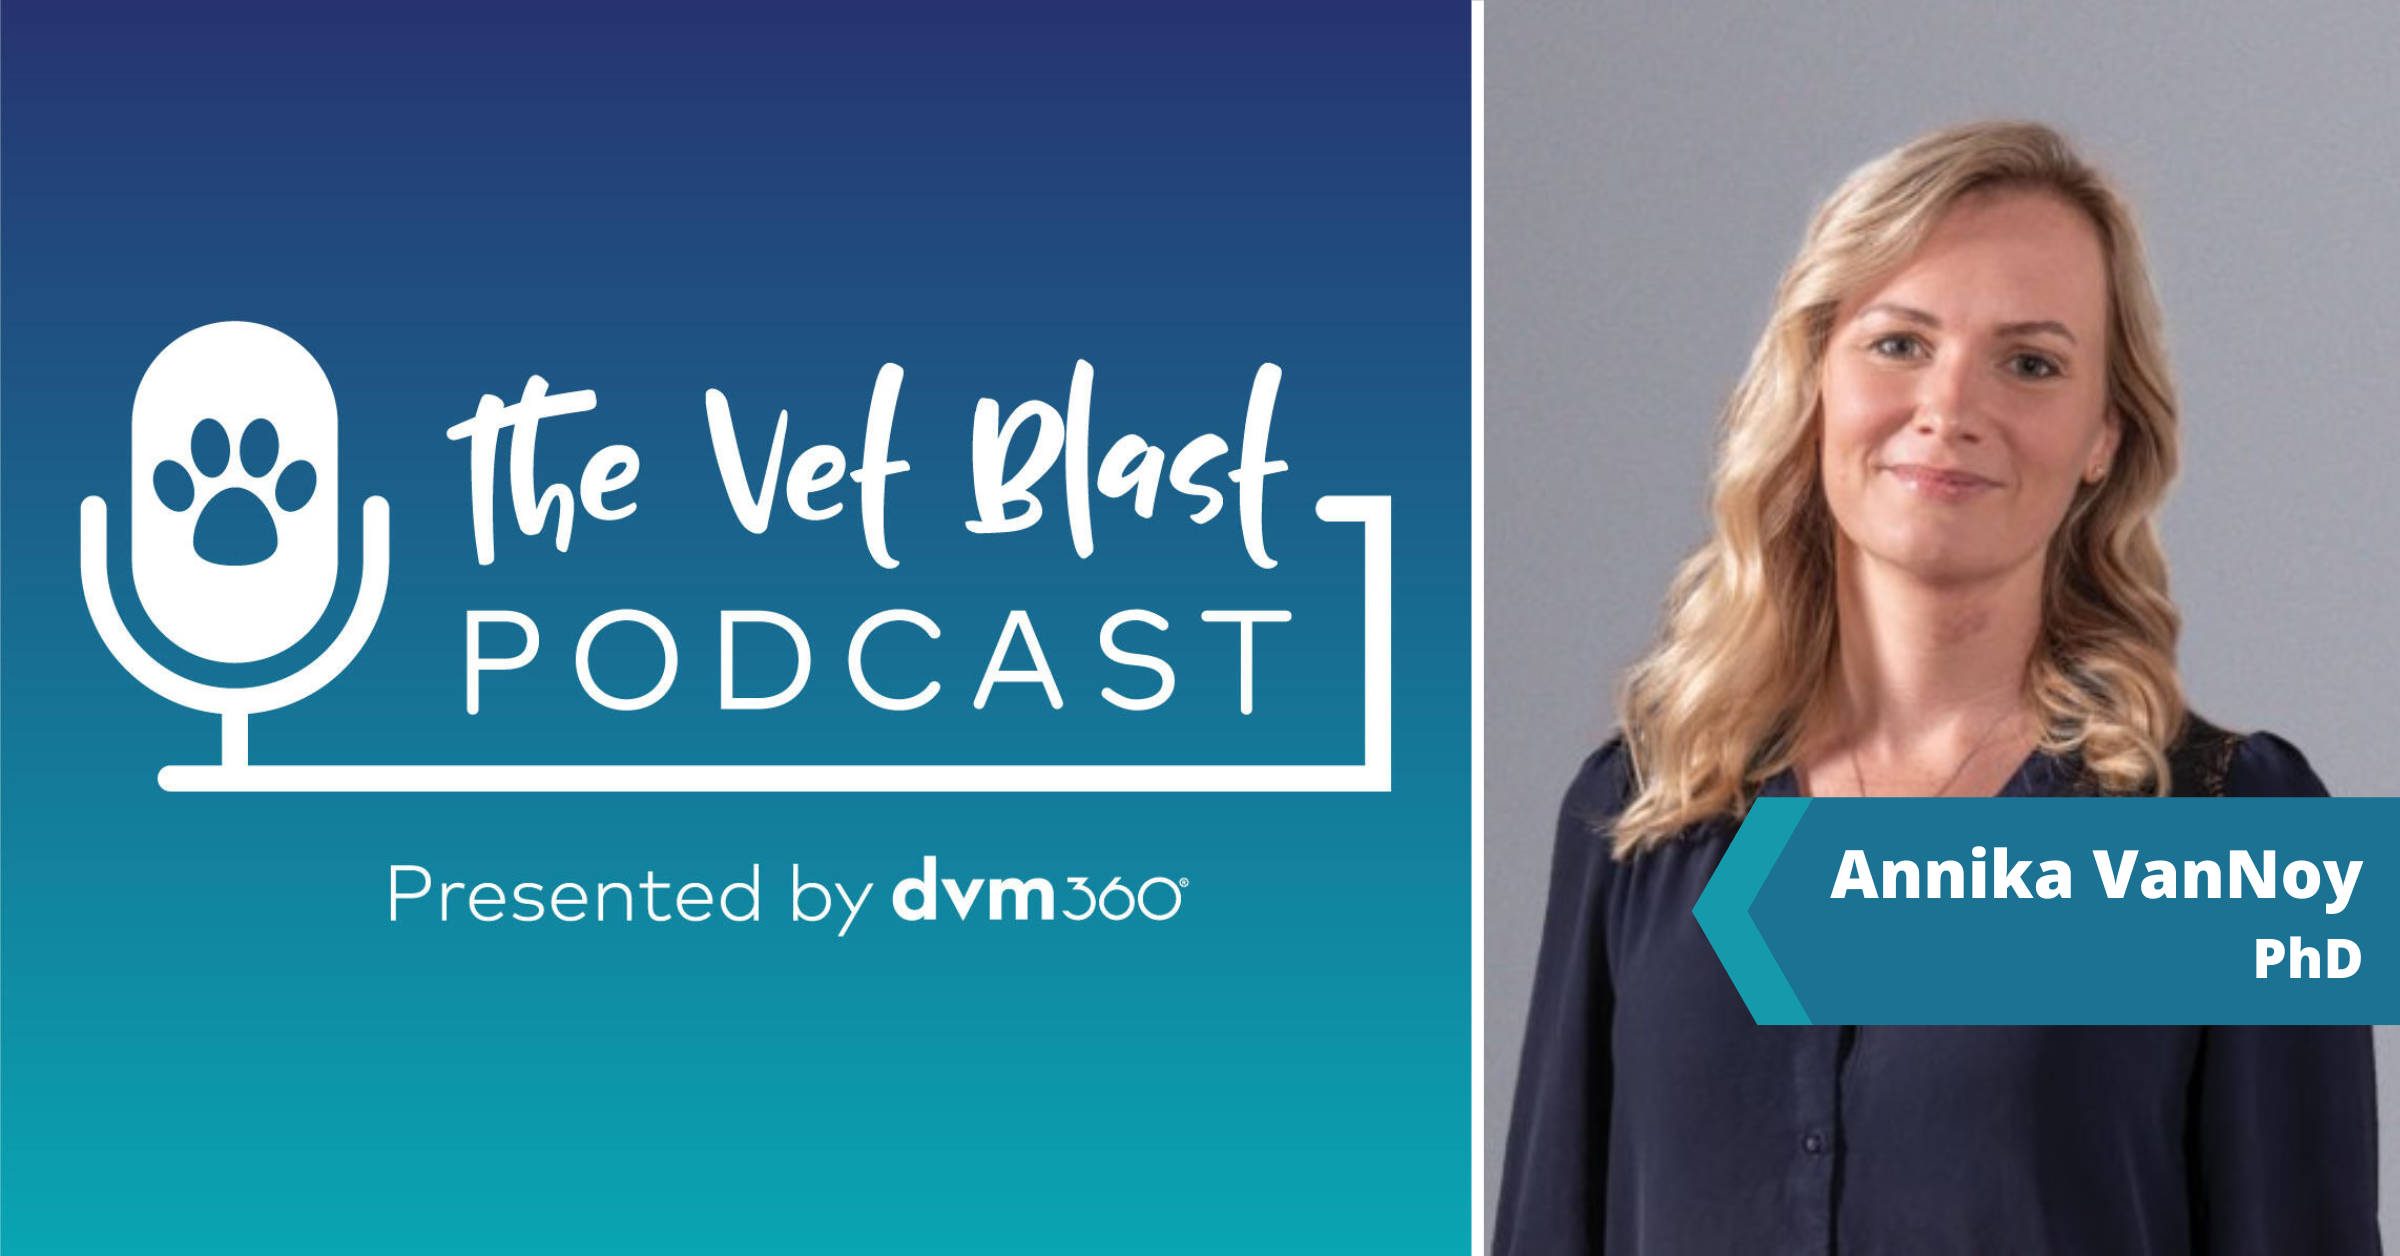 The Vet Blast Podcast with Annika VanNoy